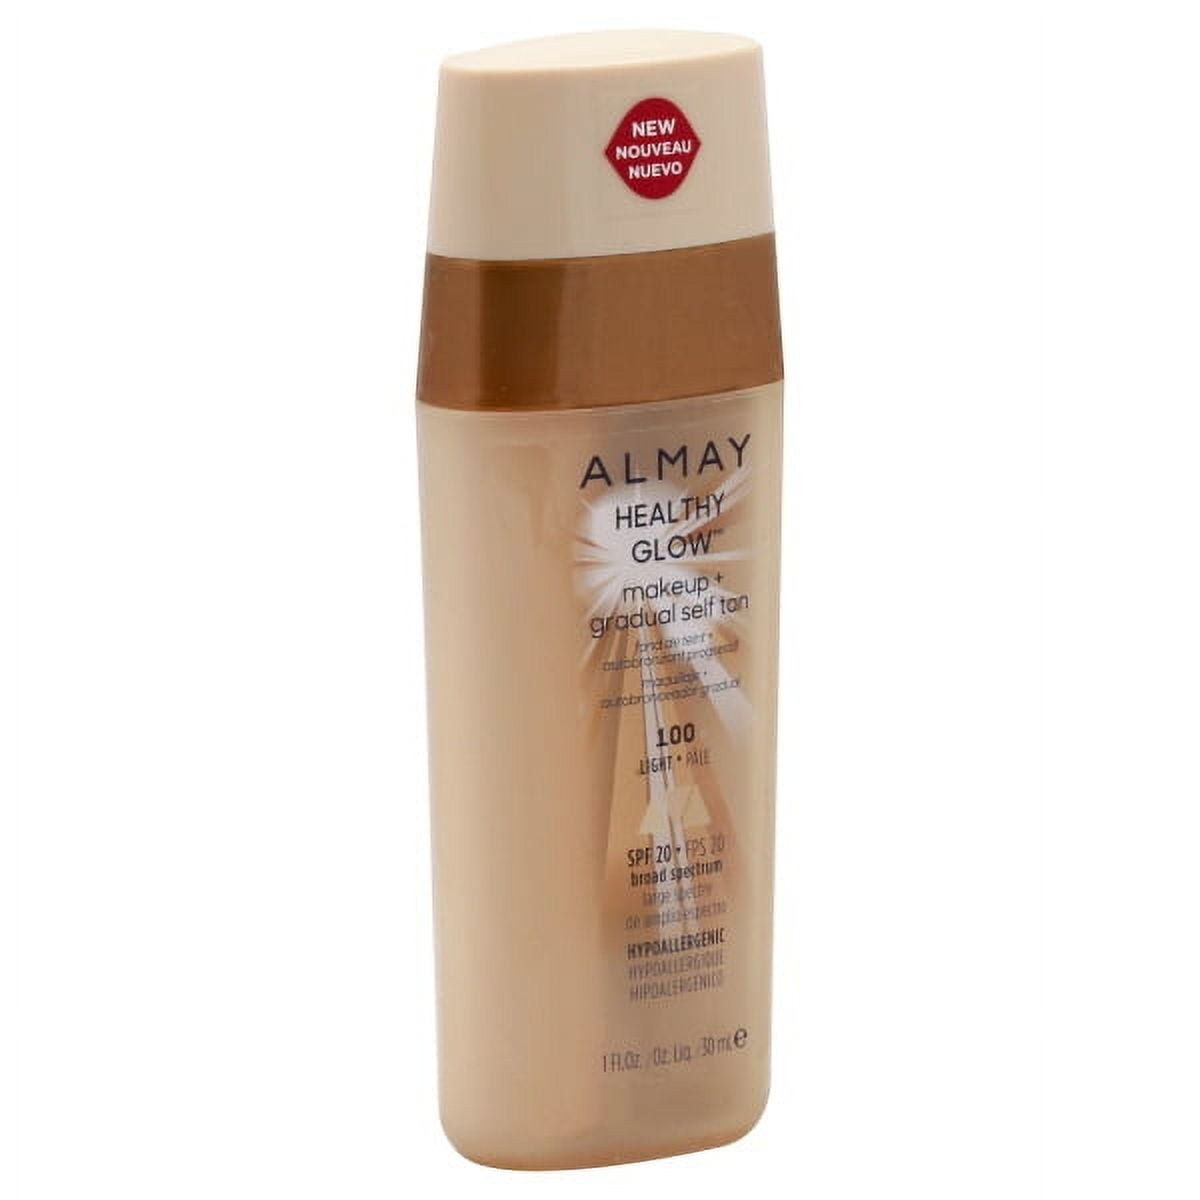 Almay Healthy Glow Makeup + Gradual Self Tan, Light 100, SPF 20 - 1 fl oz